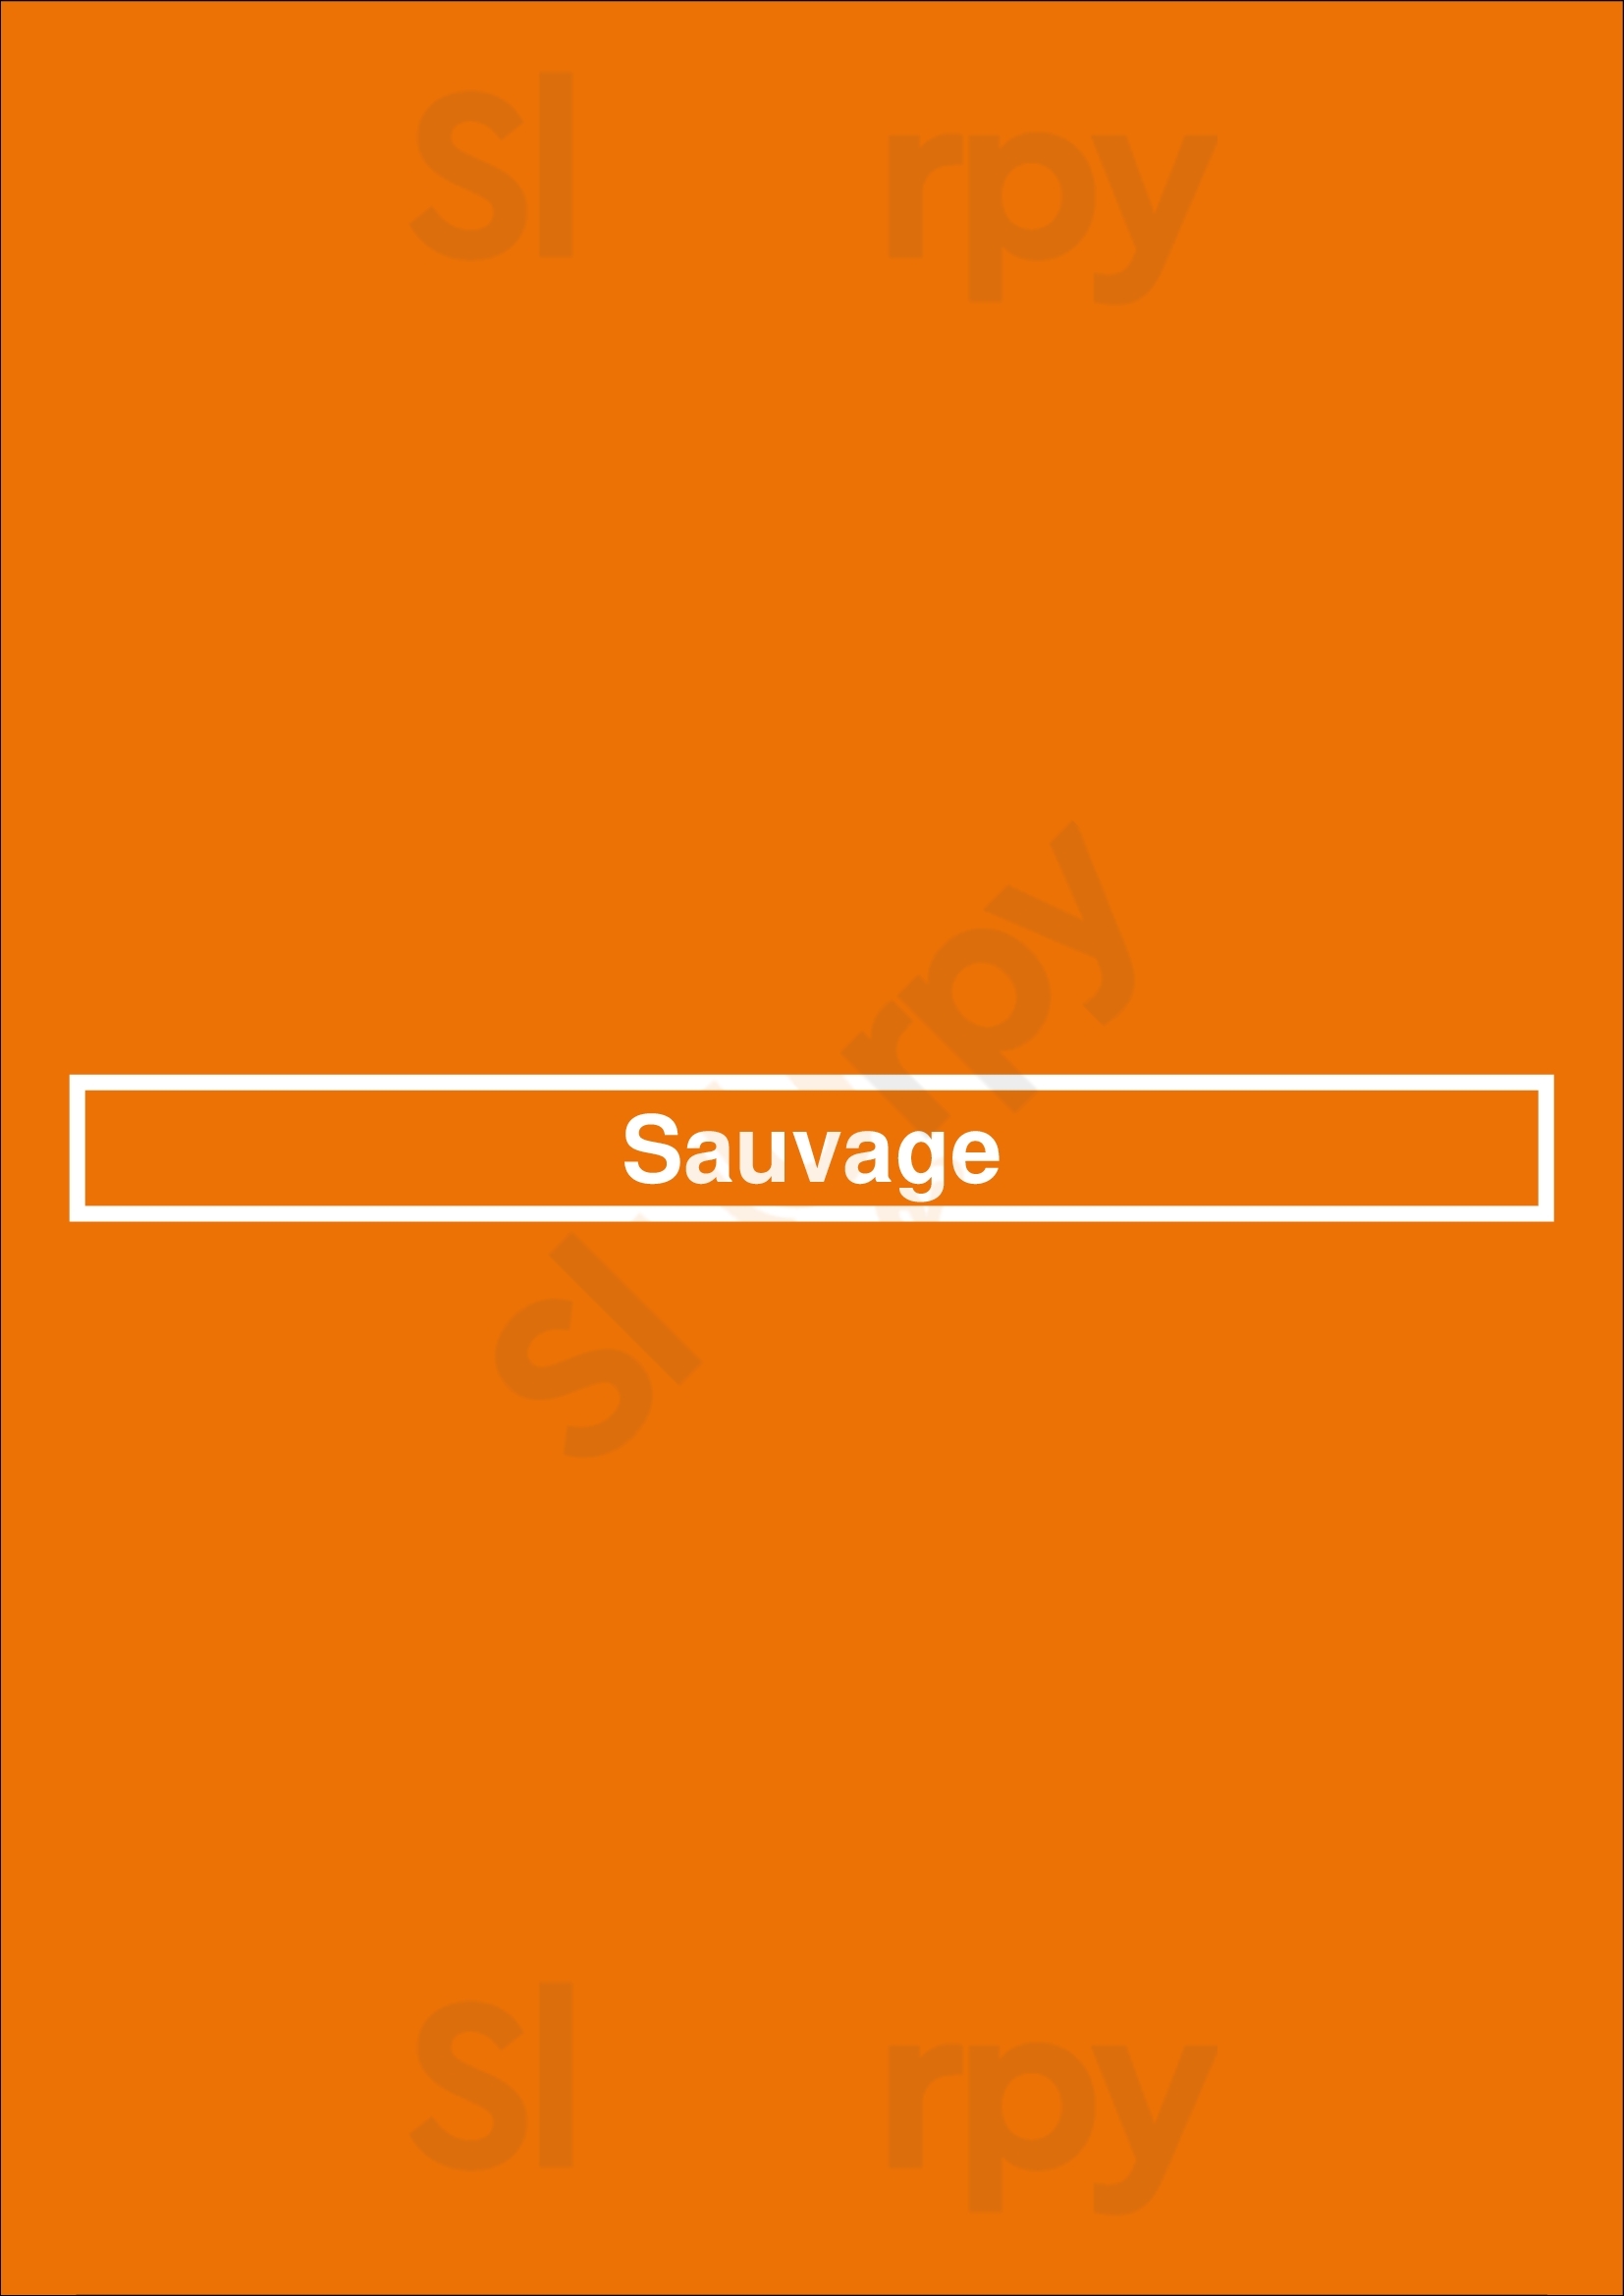 Sauvage Lisboa Menu - 1